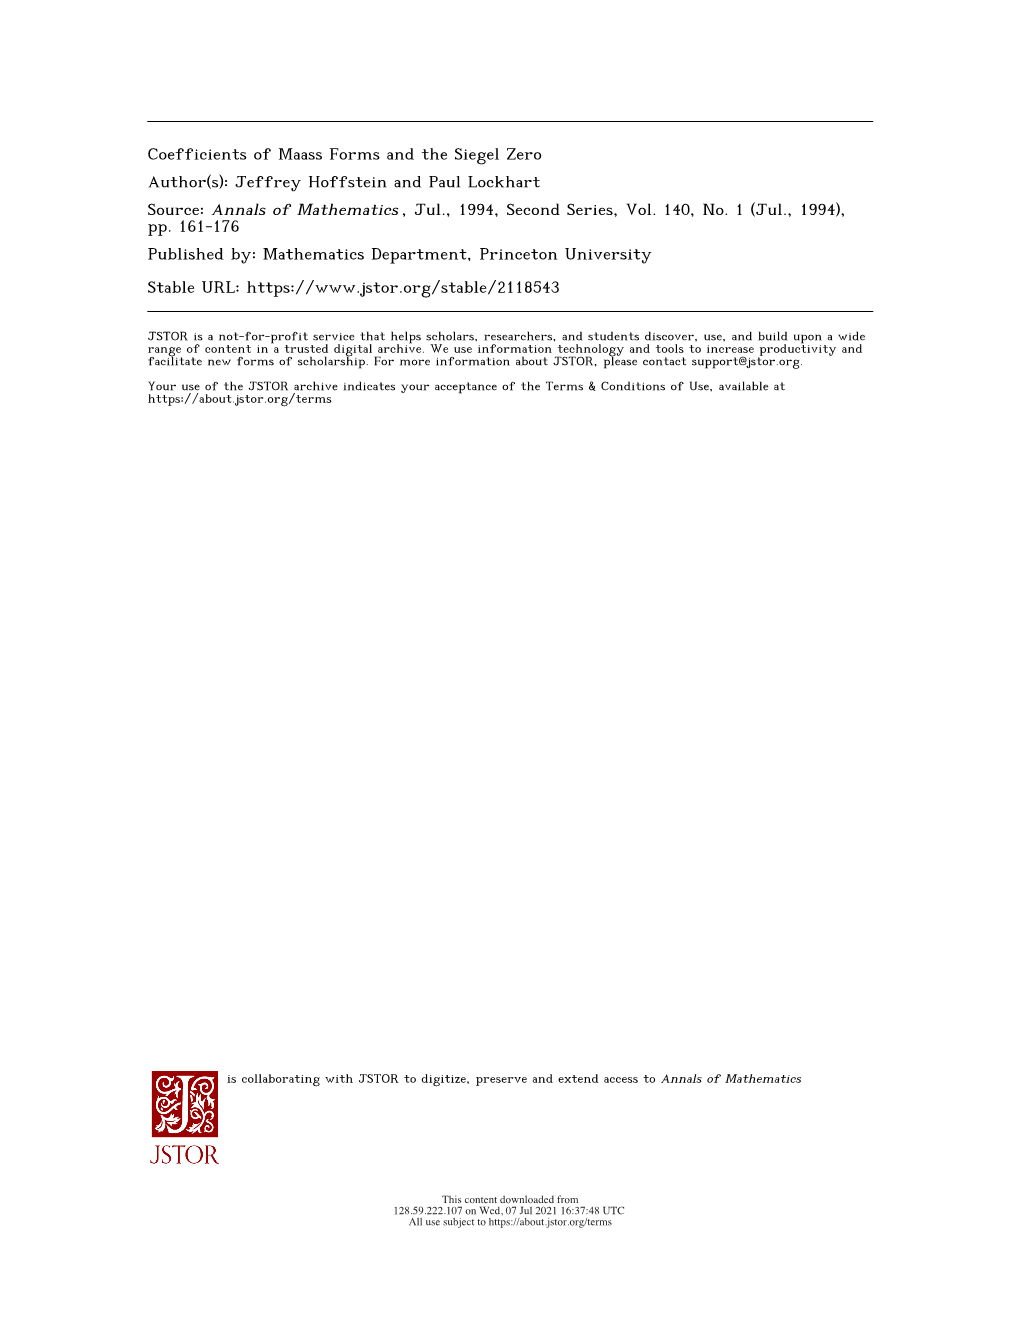 Coefficients of Maass Forms and the Siegel Zero Author(S): Jeffrey Hoffstein and Paul Lockhart Source: Annals of Mathematics , Jul., 1994, Second Series, Vol